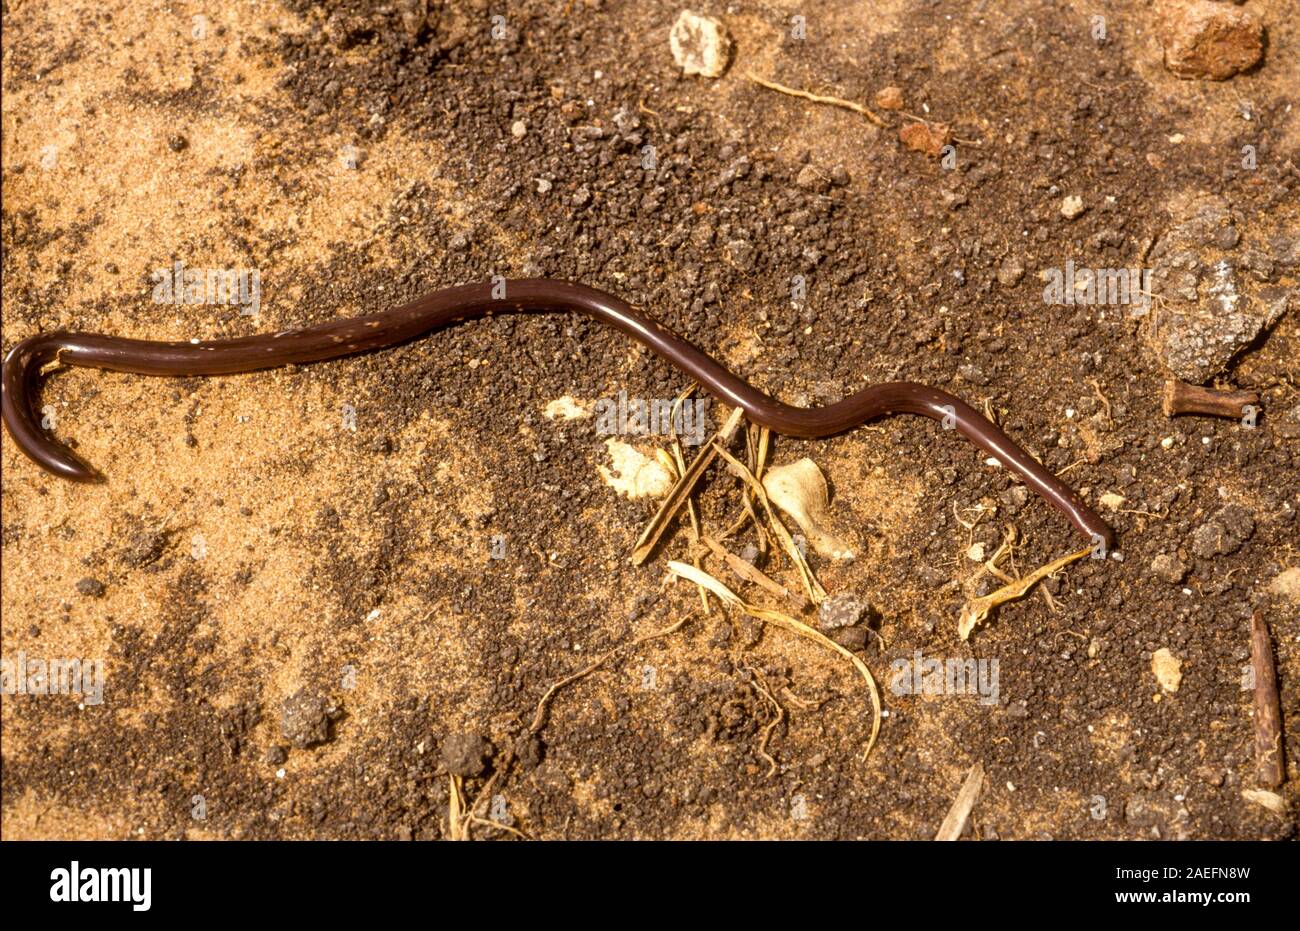 Xerotyphlops vermicularis, the European blind snake, European worm snake, Eurasian blind snake, or Eurasian worm snake, is a species of snake in the g Stock Photo